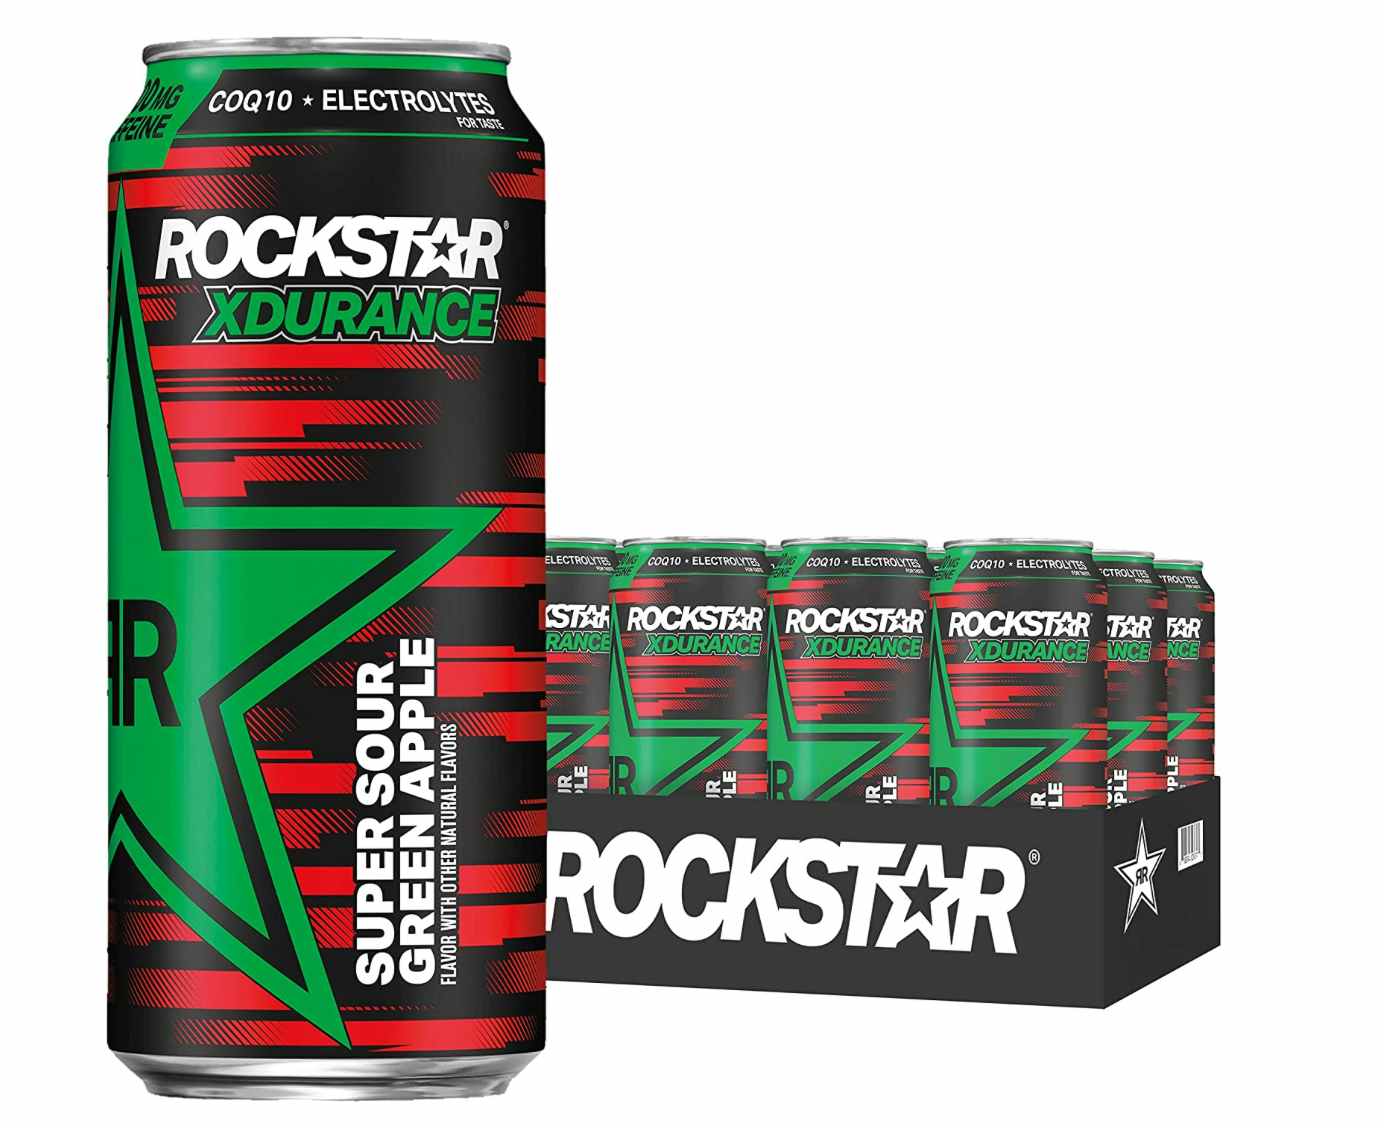 Rockstar energy drink